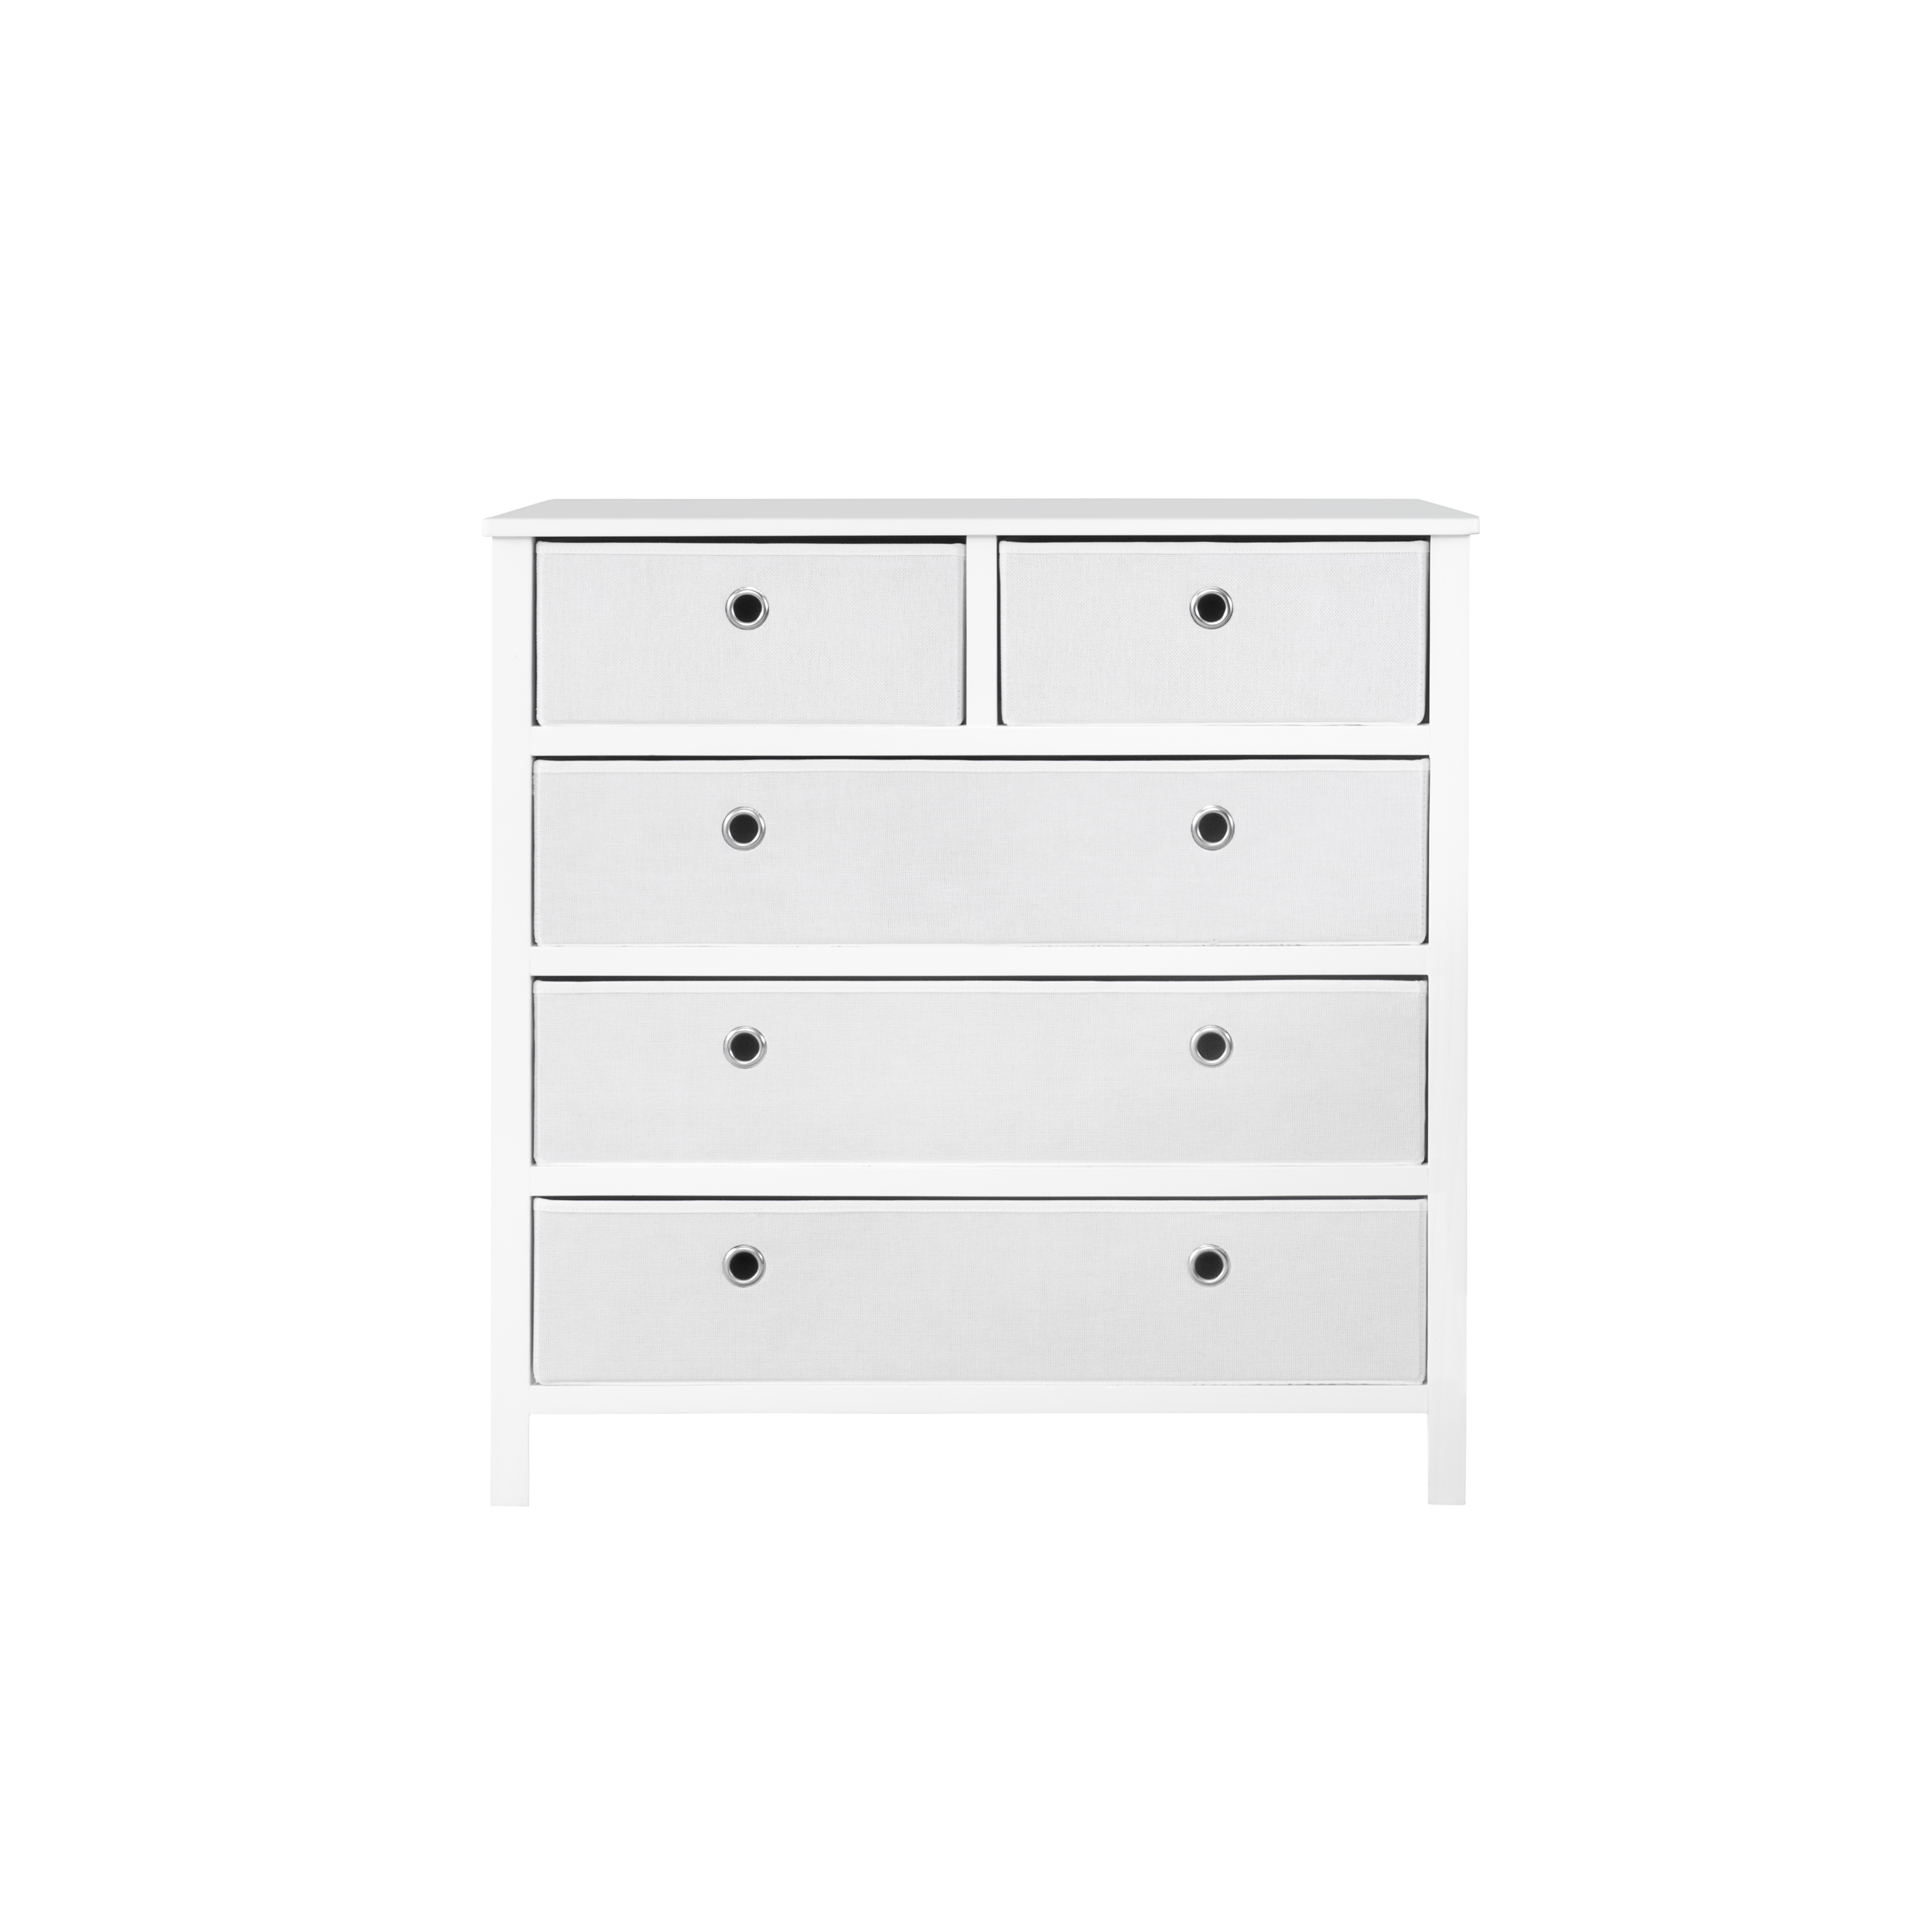 EZ Home Solutions Foldable Furniture Split Drawer Single Dresser 31 x 31 x 19 - White - image 2 of 7